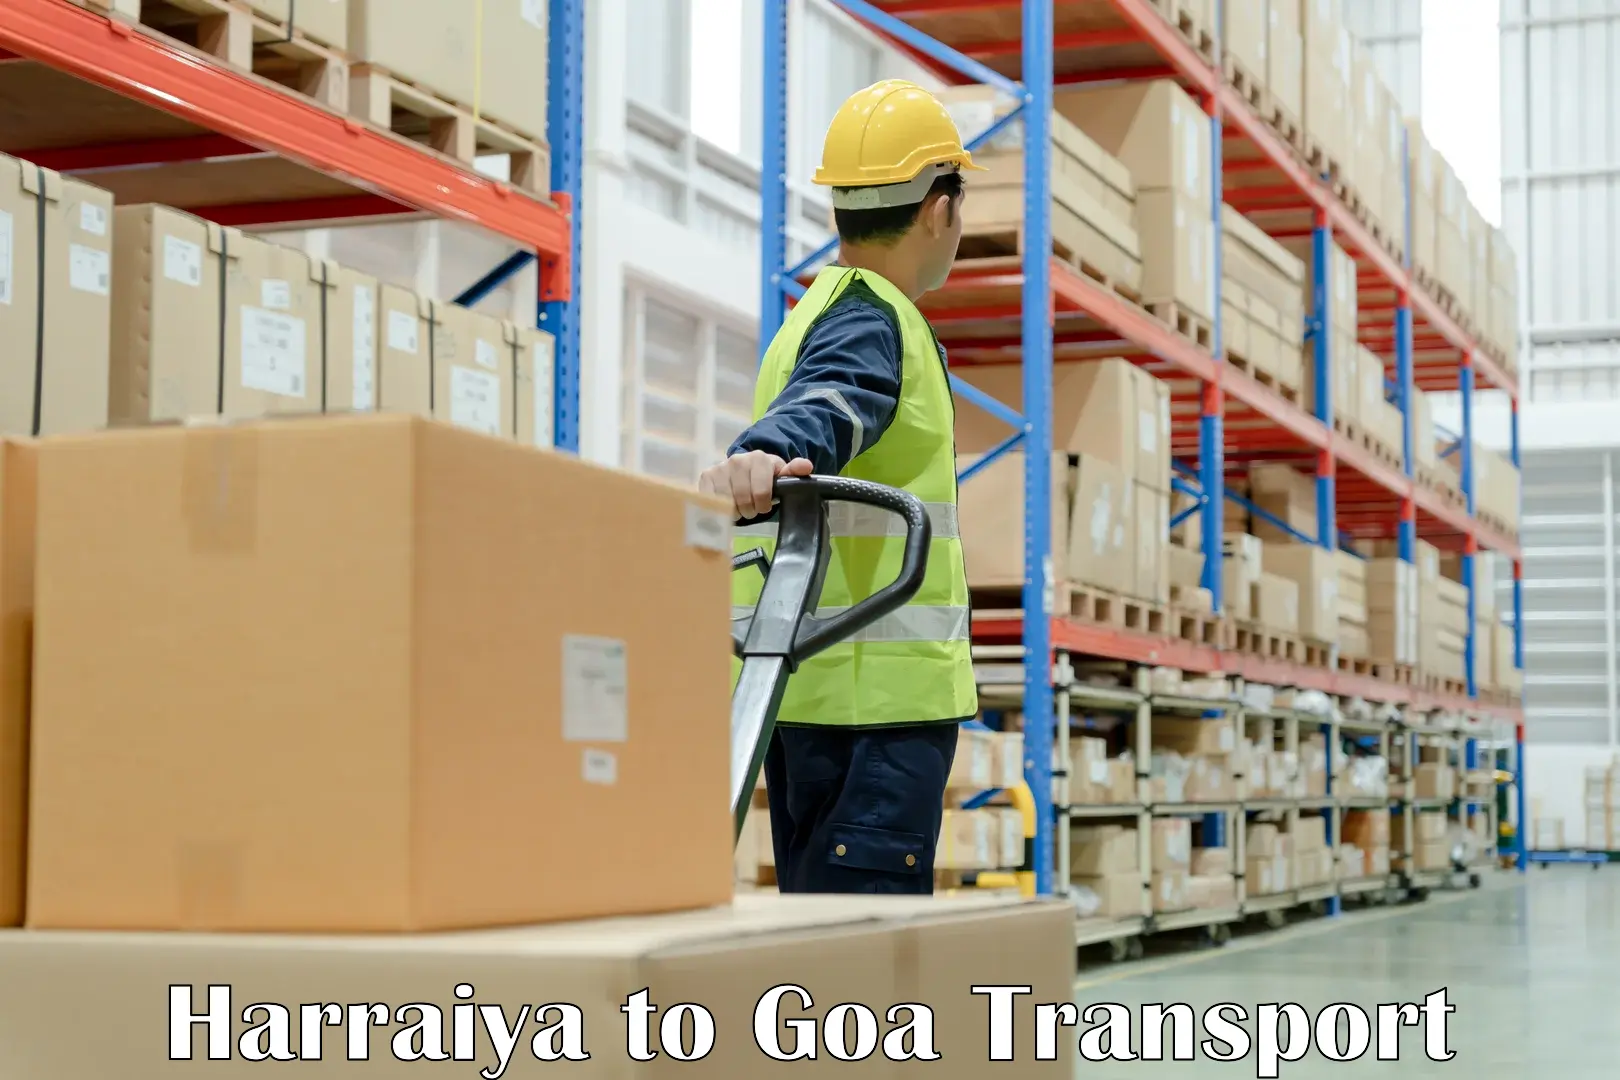 Transport in sharing Harraiya to Goa